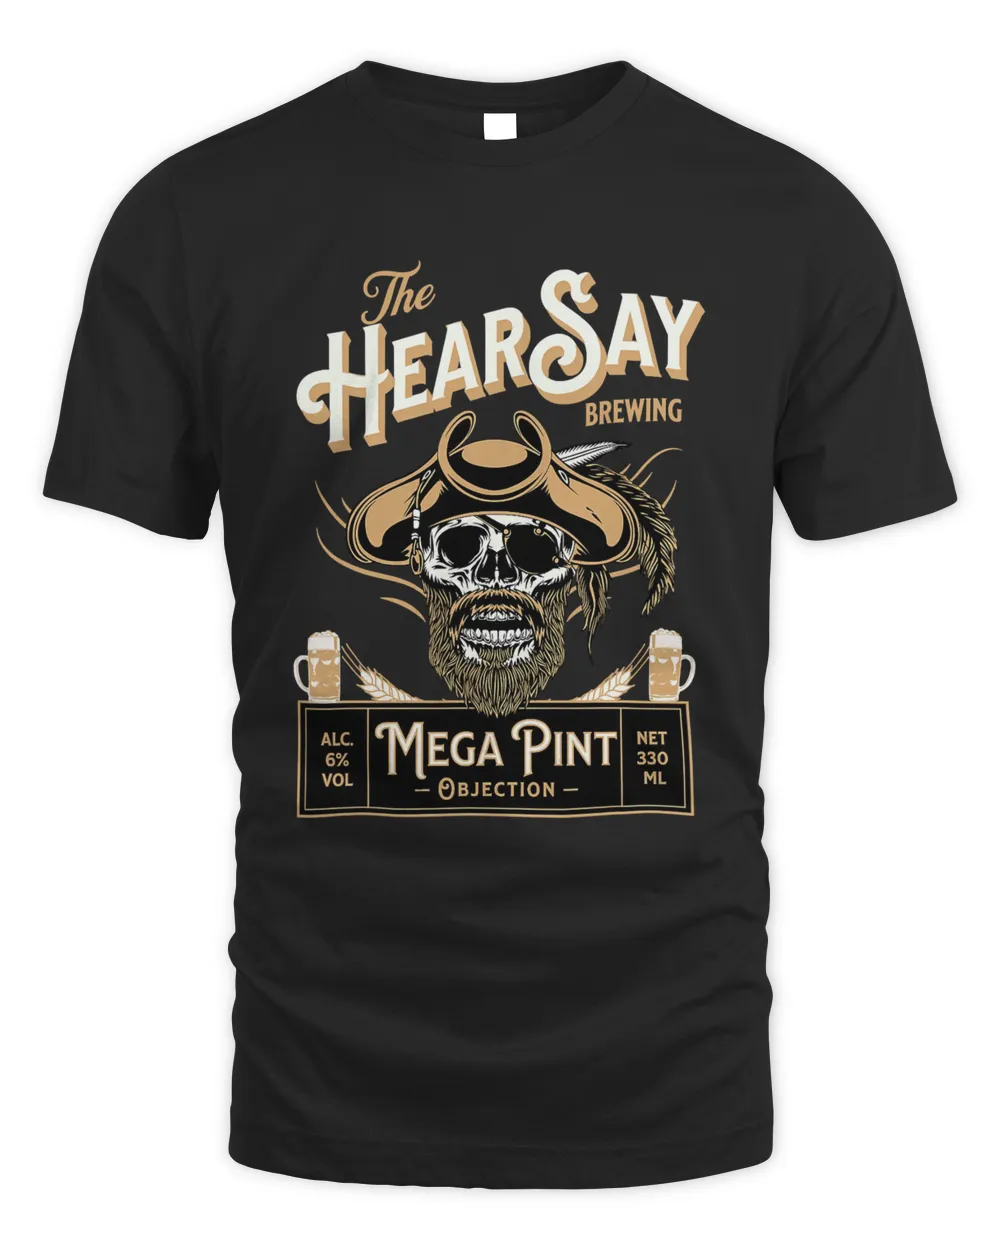 HearSay Mega Pint Brewing Objection T-Shirt